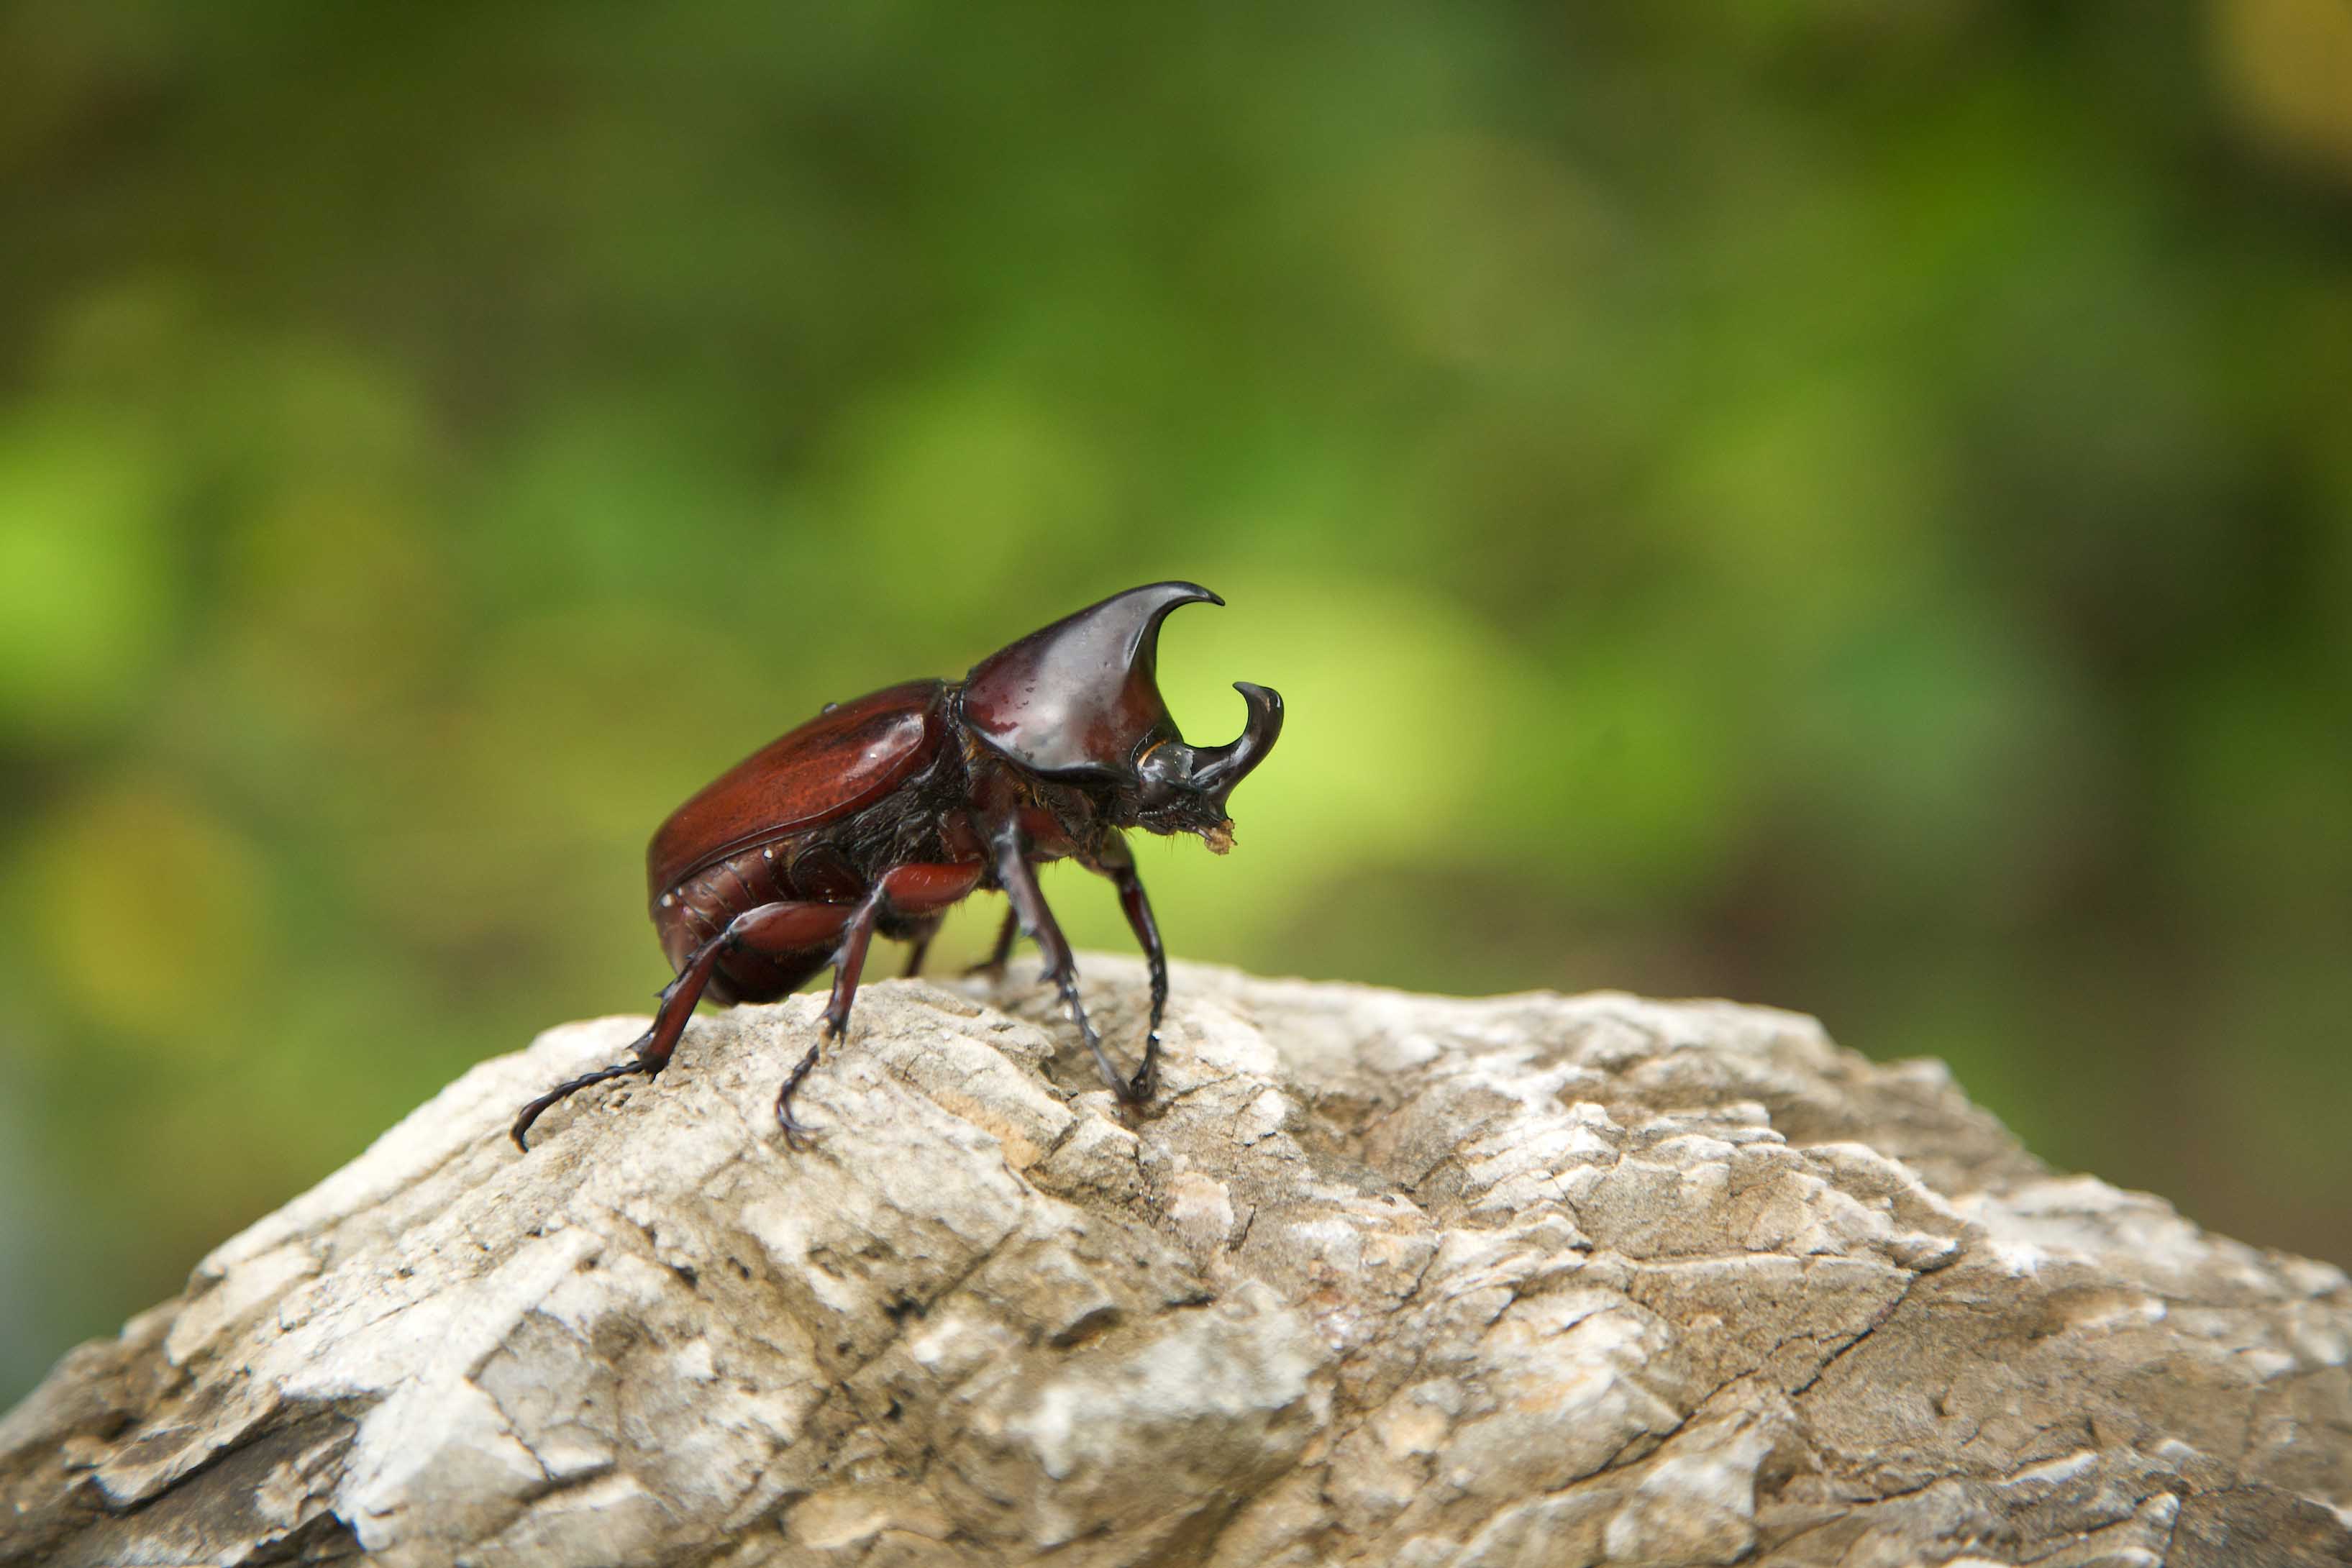 rhino beetle